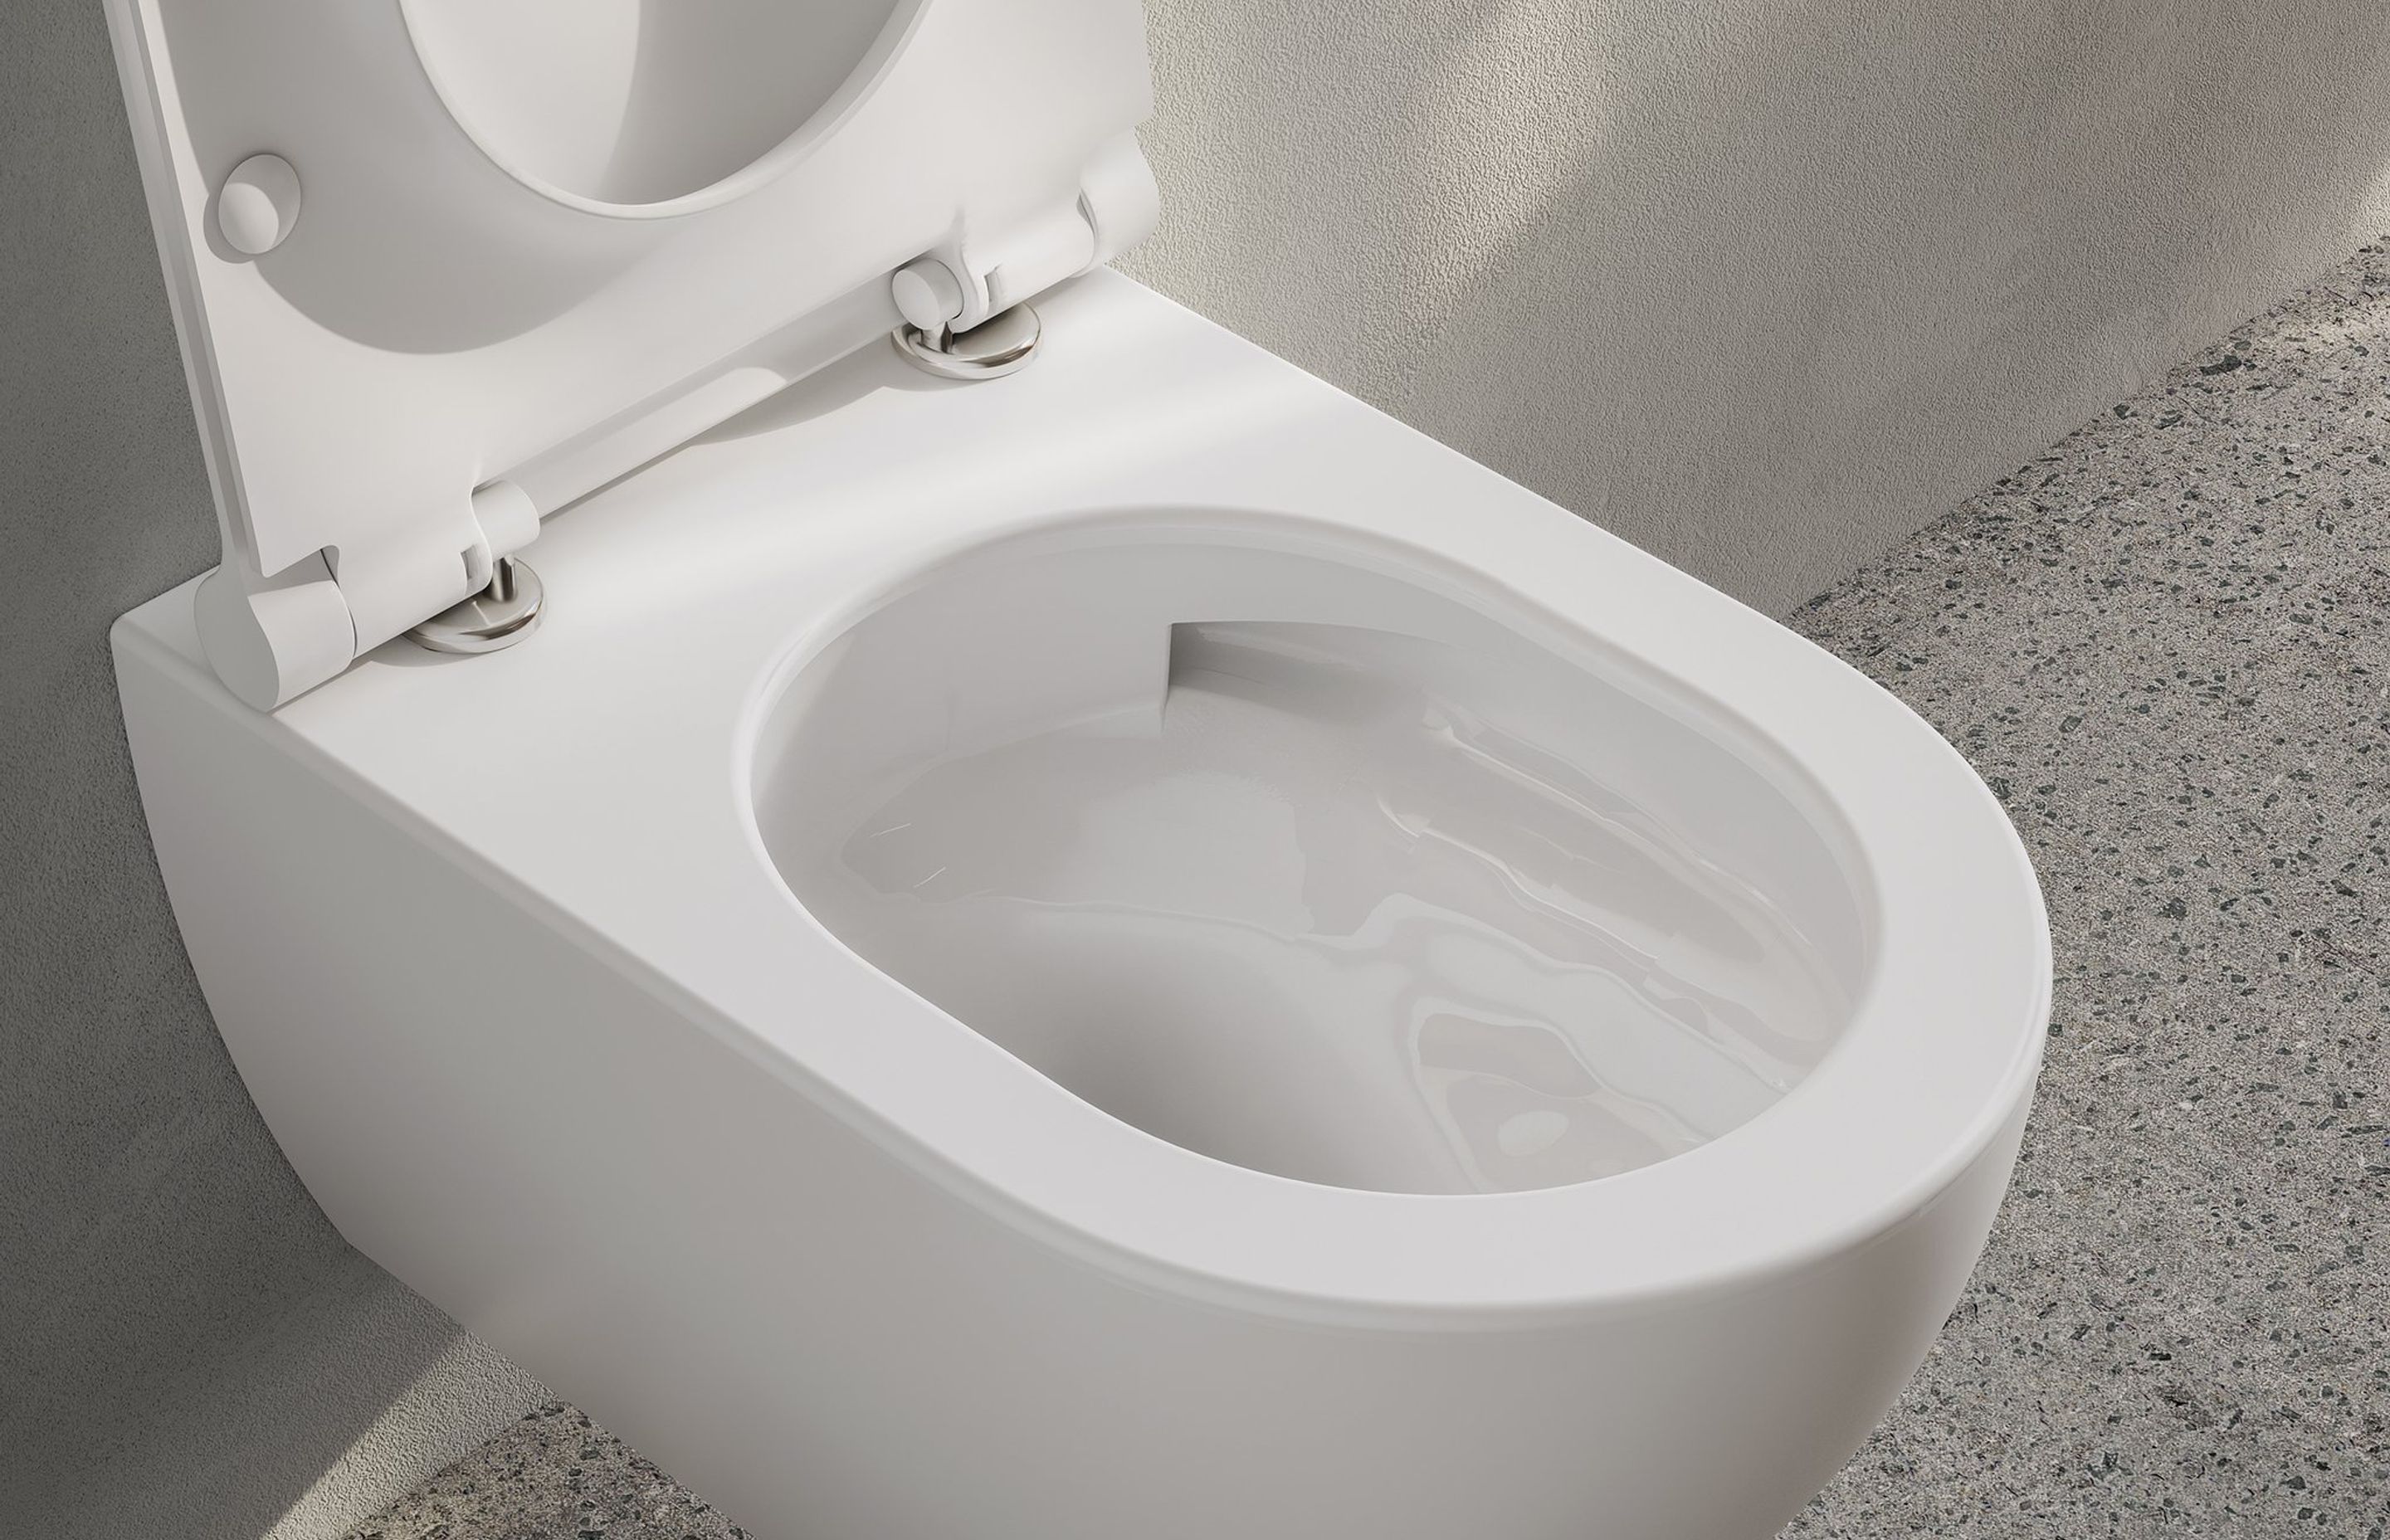 Superior sanitaryware: the latest technology in bathroom hygiene